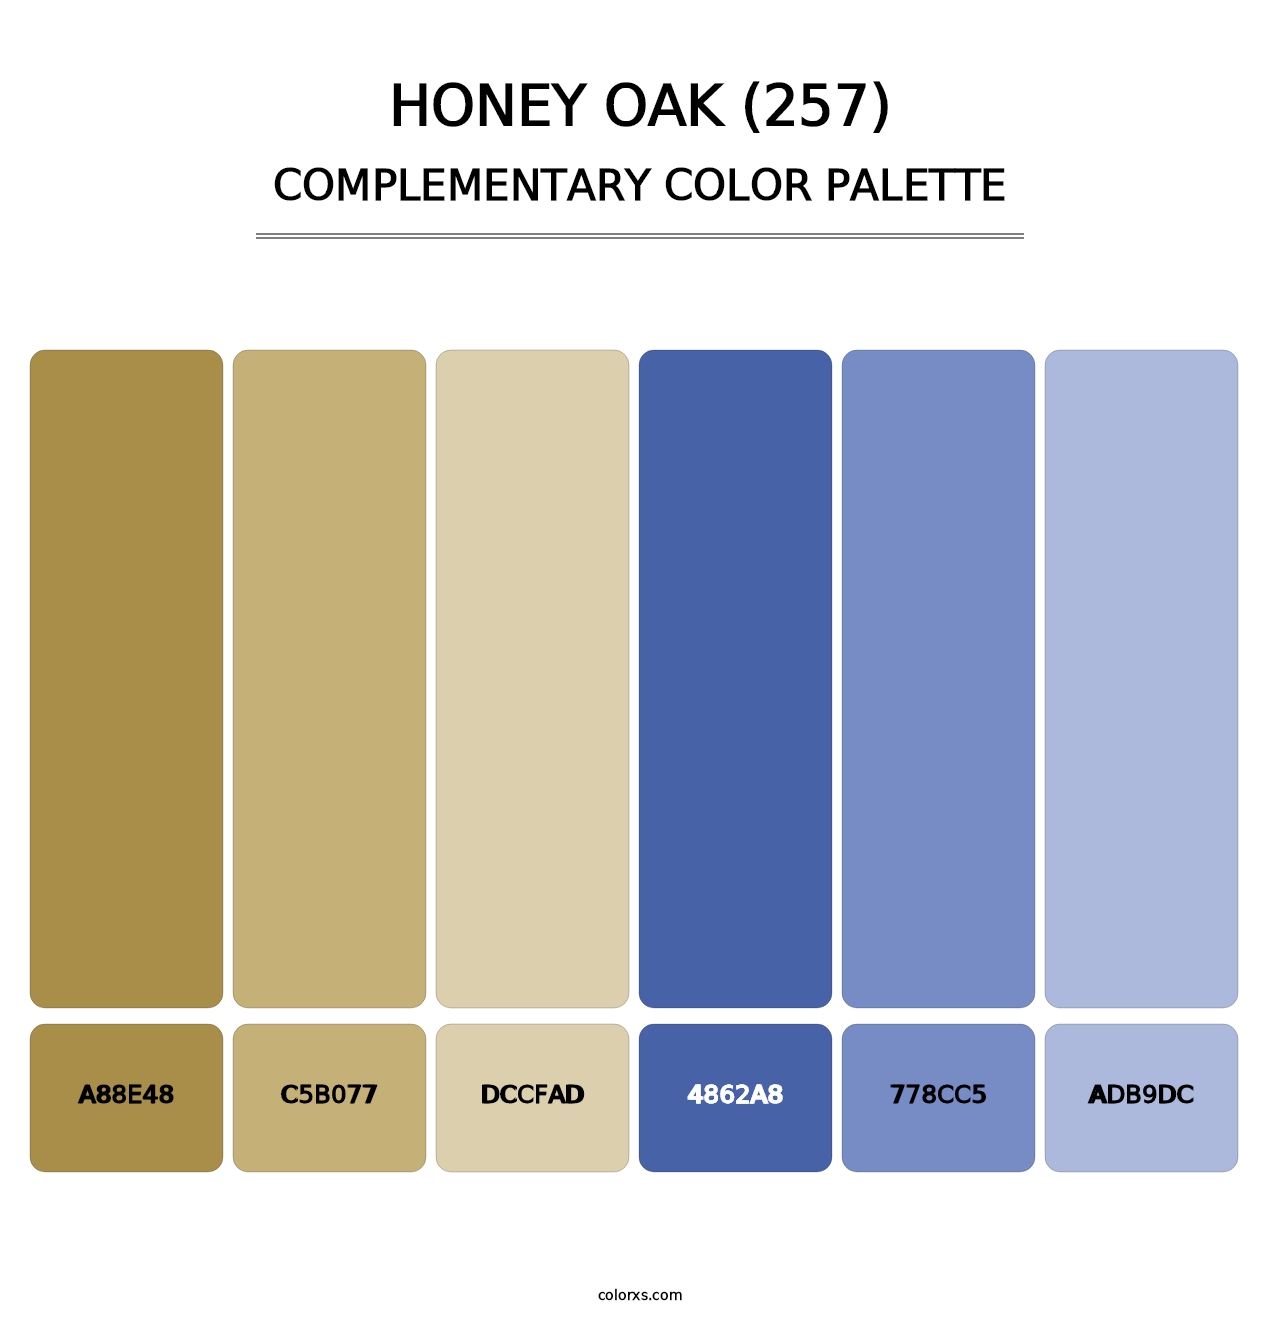 Honey Oak (257) - Complementary Color Palette